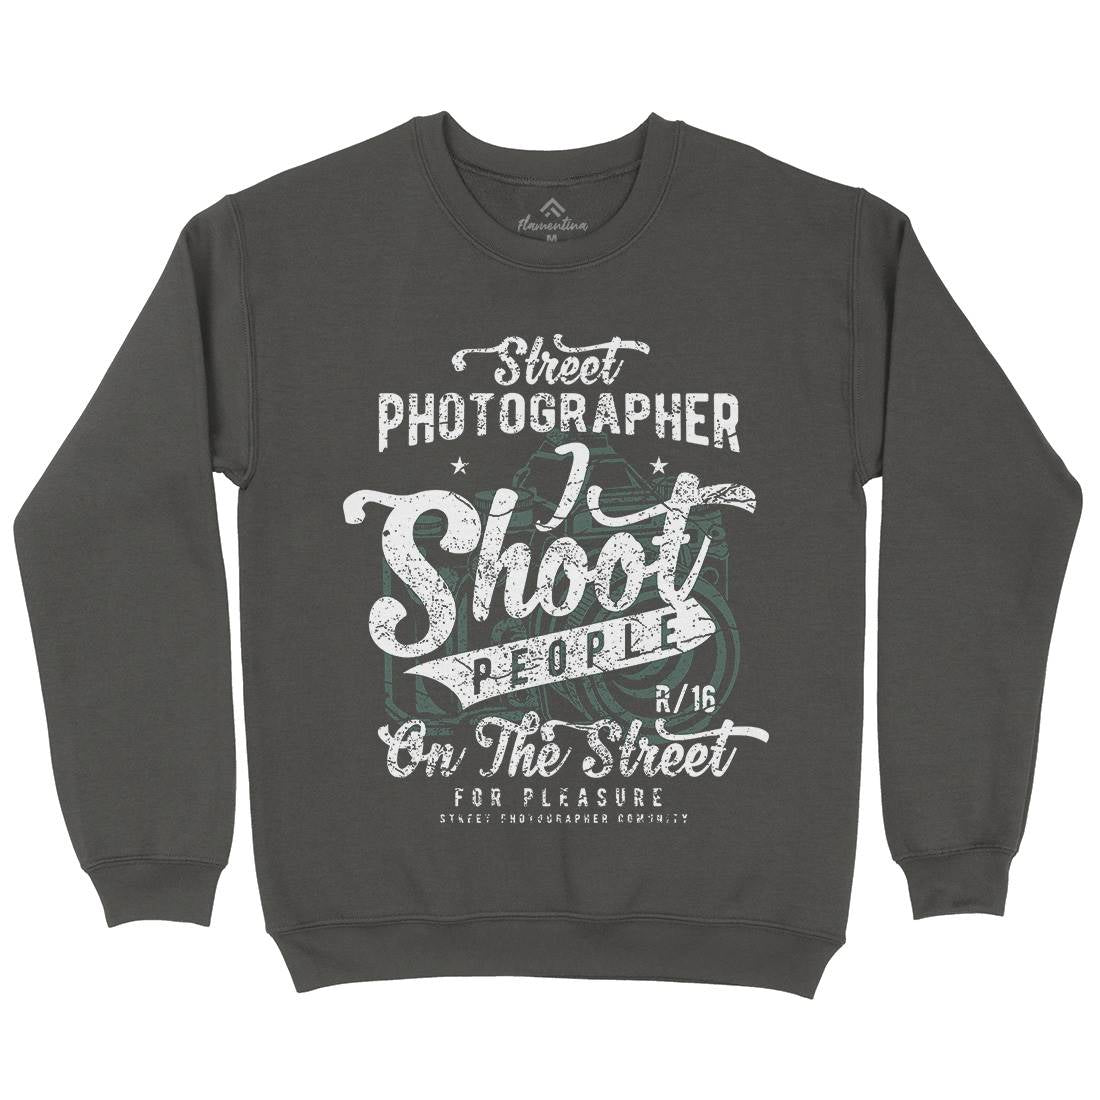 Street Photographer Kids Crew Neck Sweatshirt Media A162